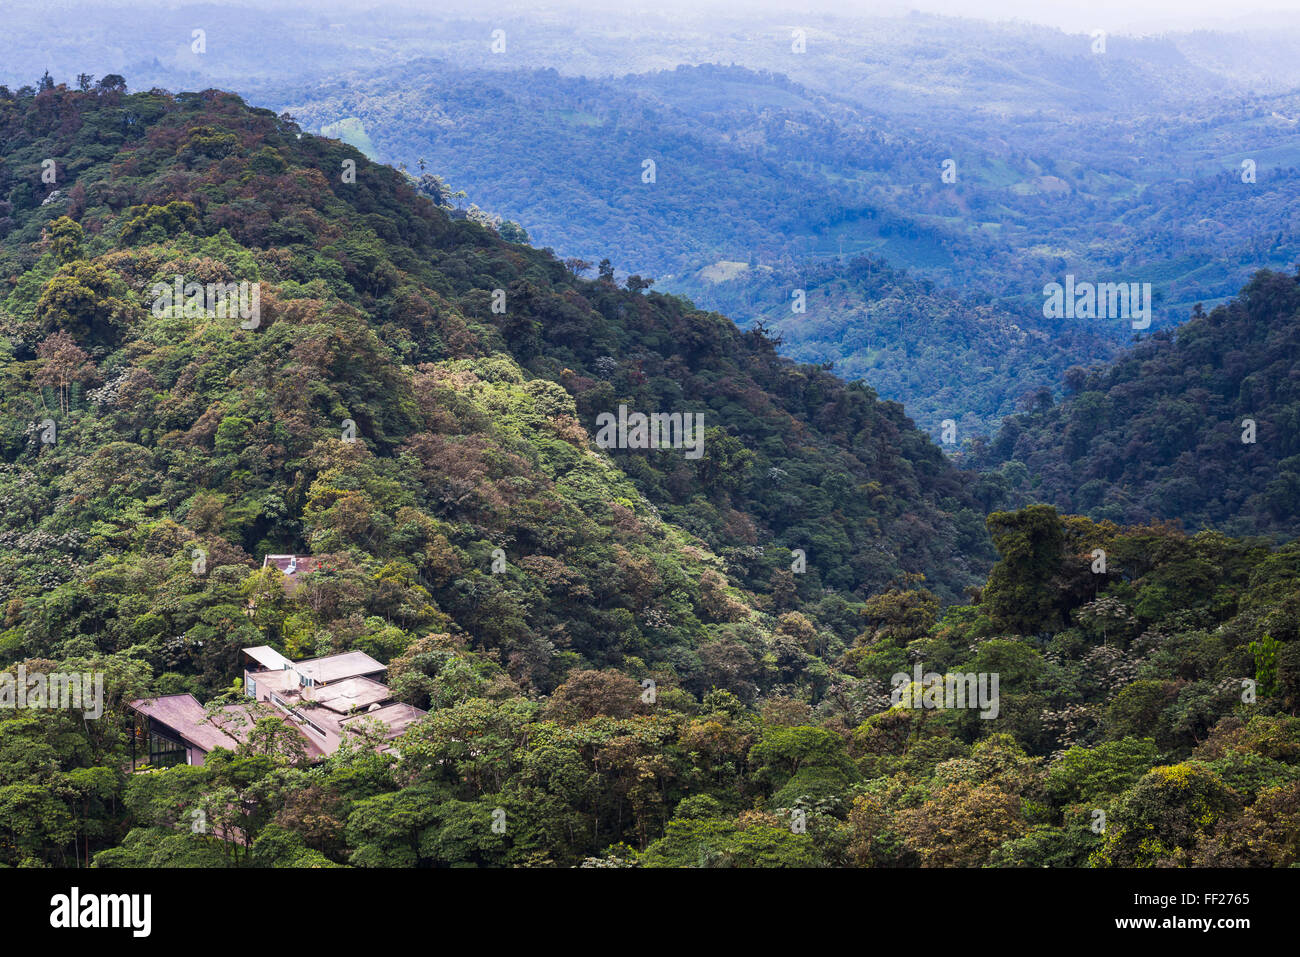 Mashpi RModge, Choco CRMoud Wald, einen Regenwald in der Pichincha Provinz von Ecuador, Südamerika Stockfoto